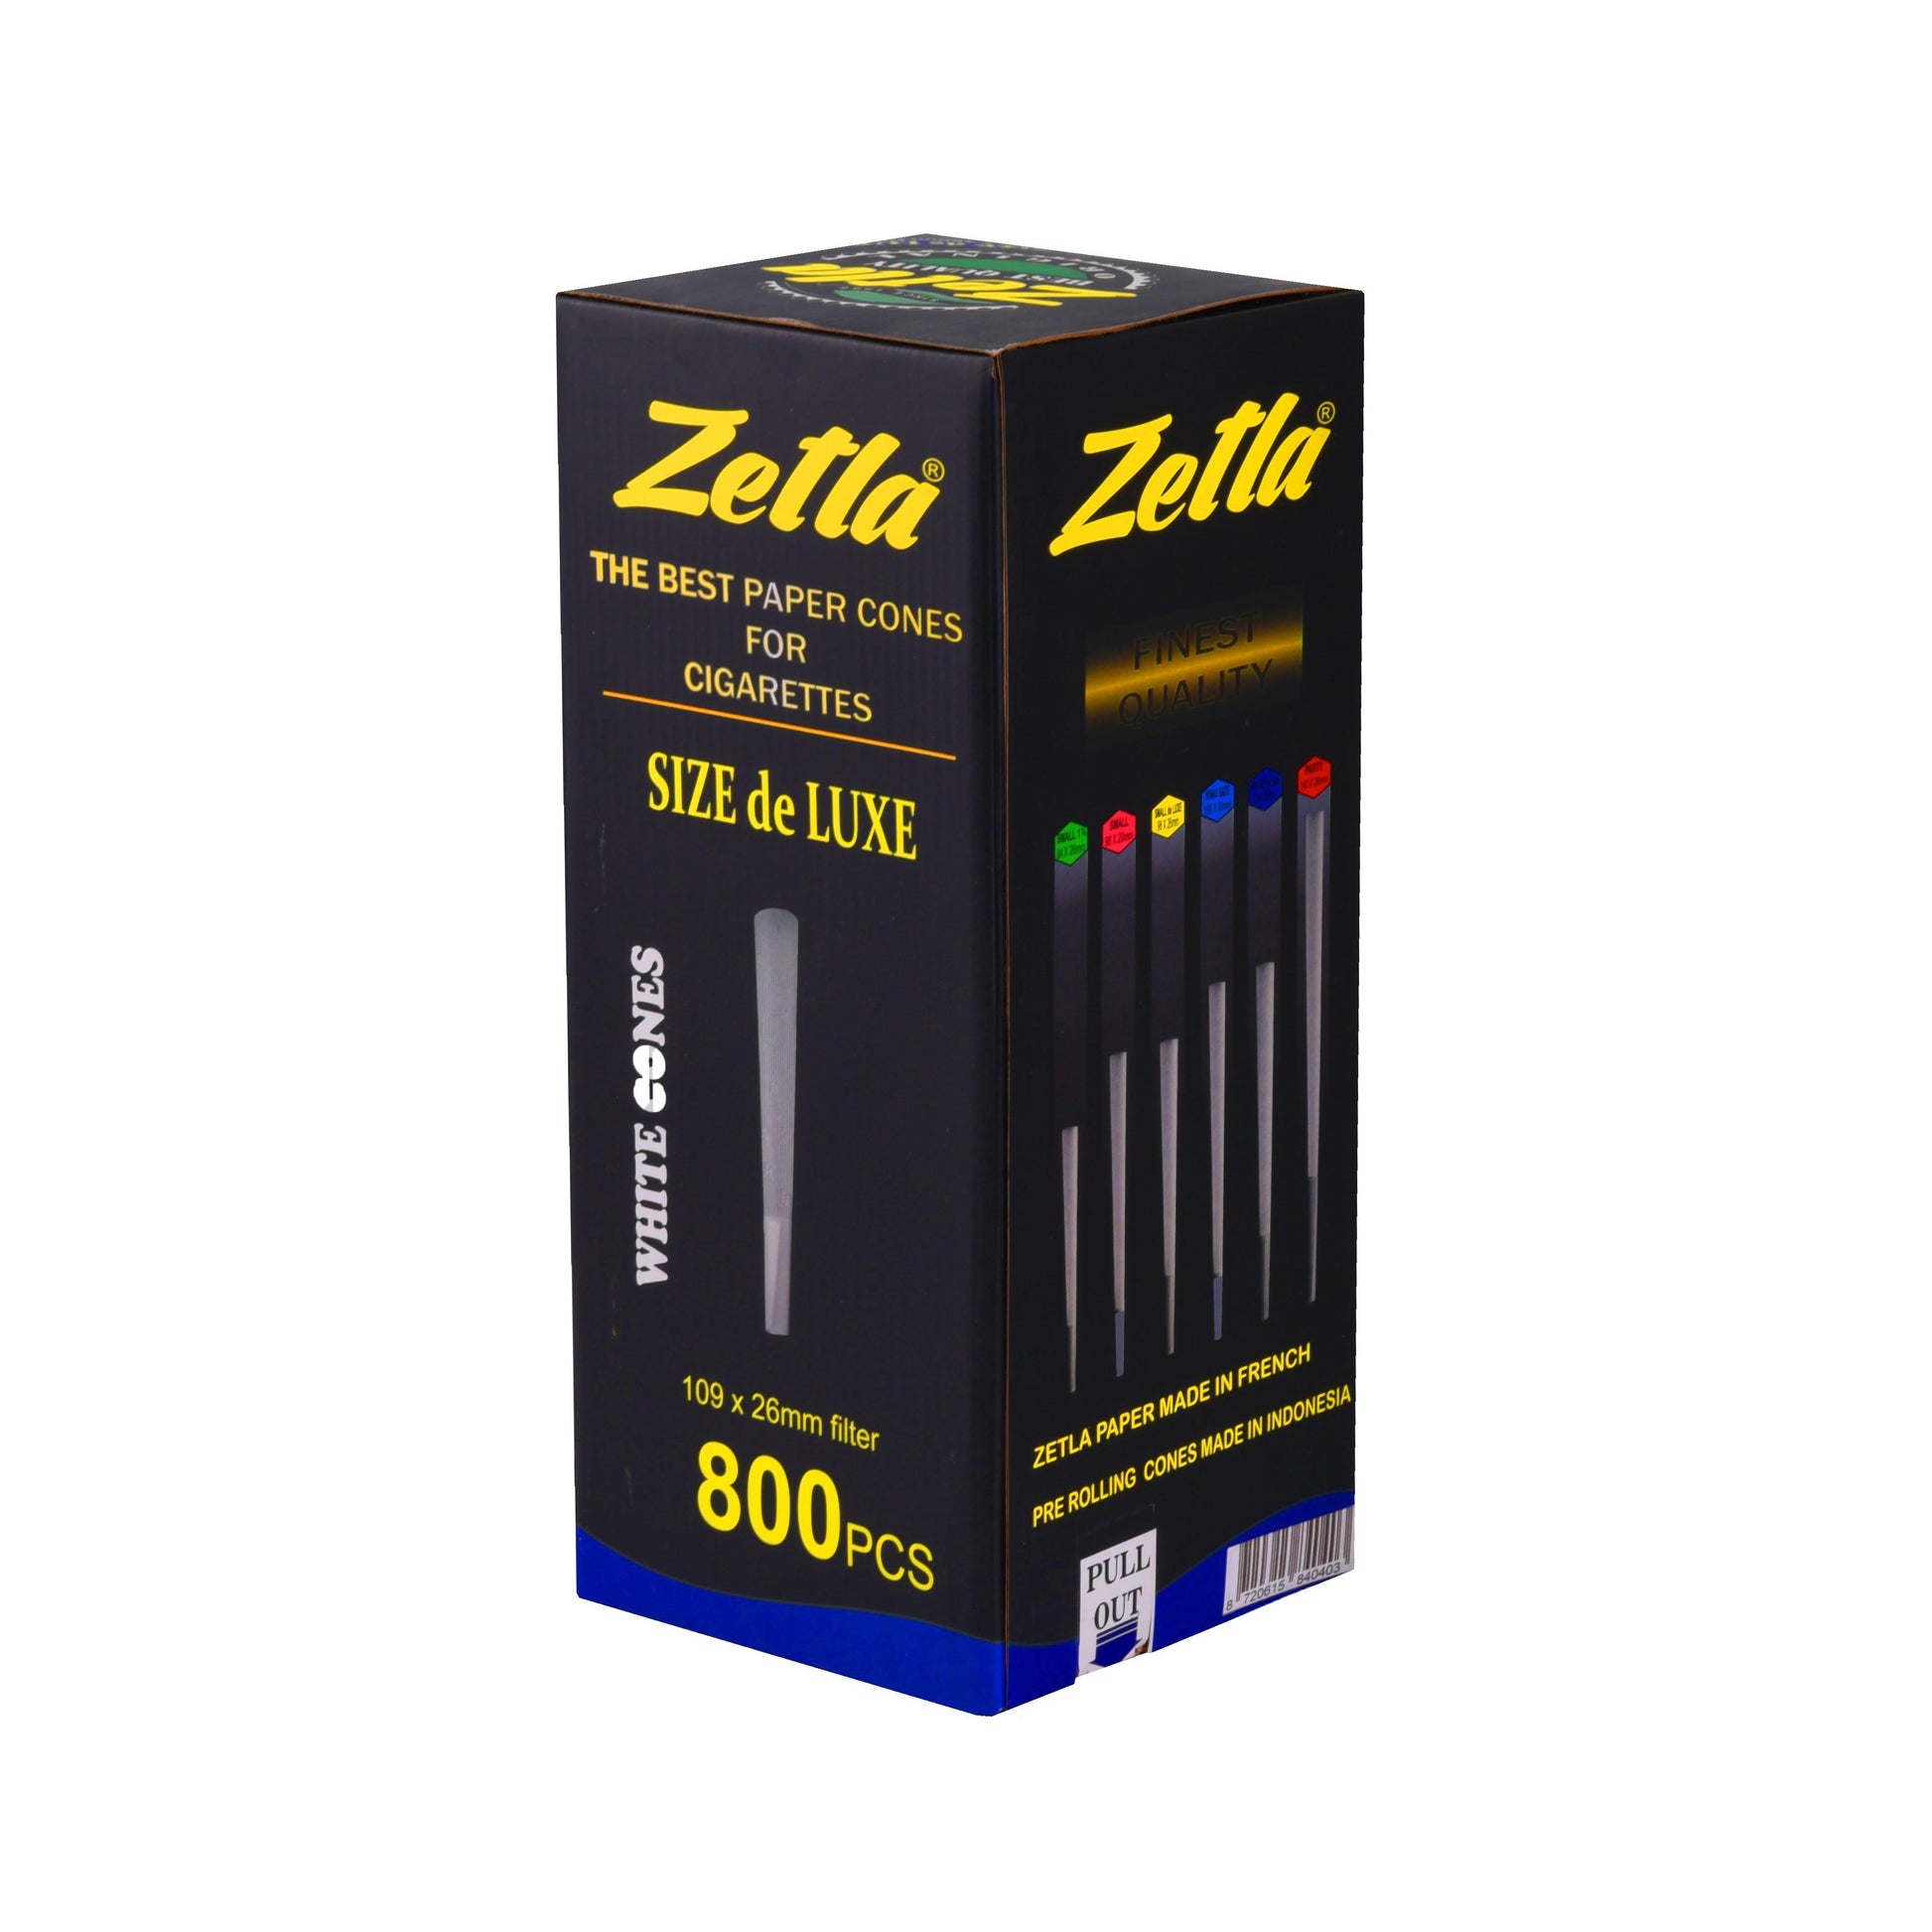 Pre Rolled Cones Zetla King Size Deluxe (800 Pcs) - Zetla